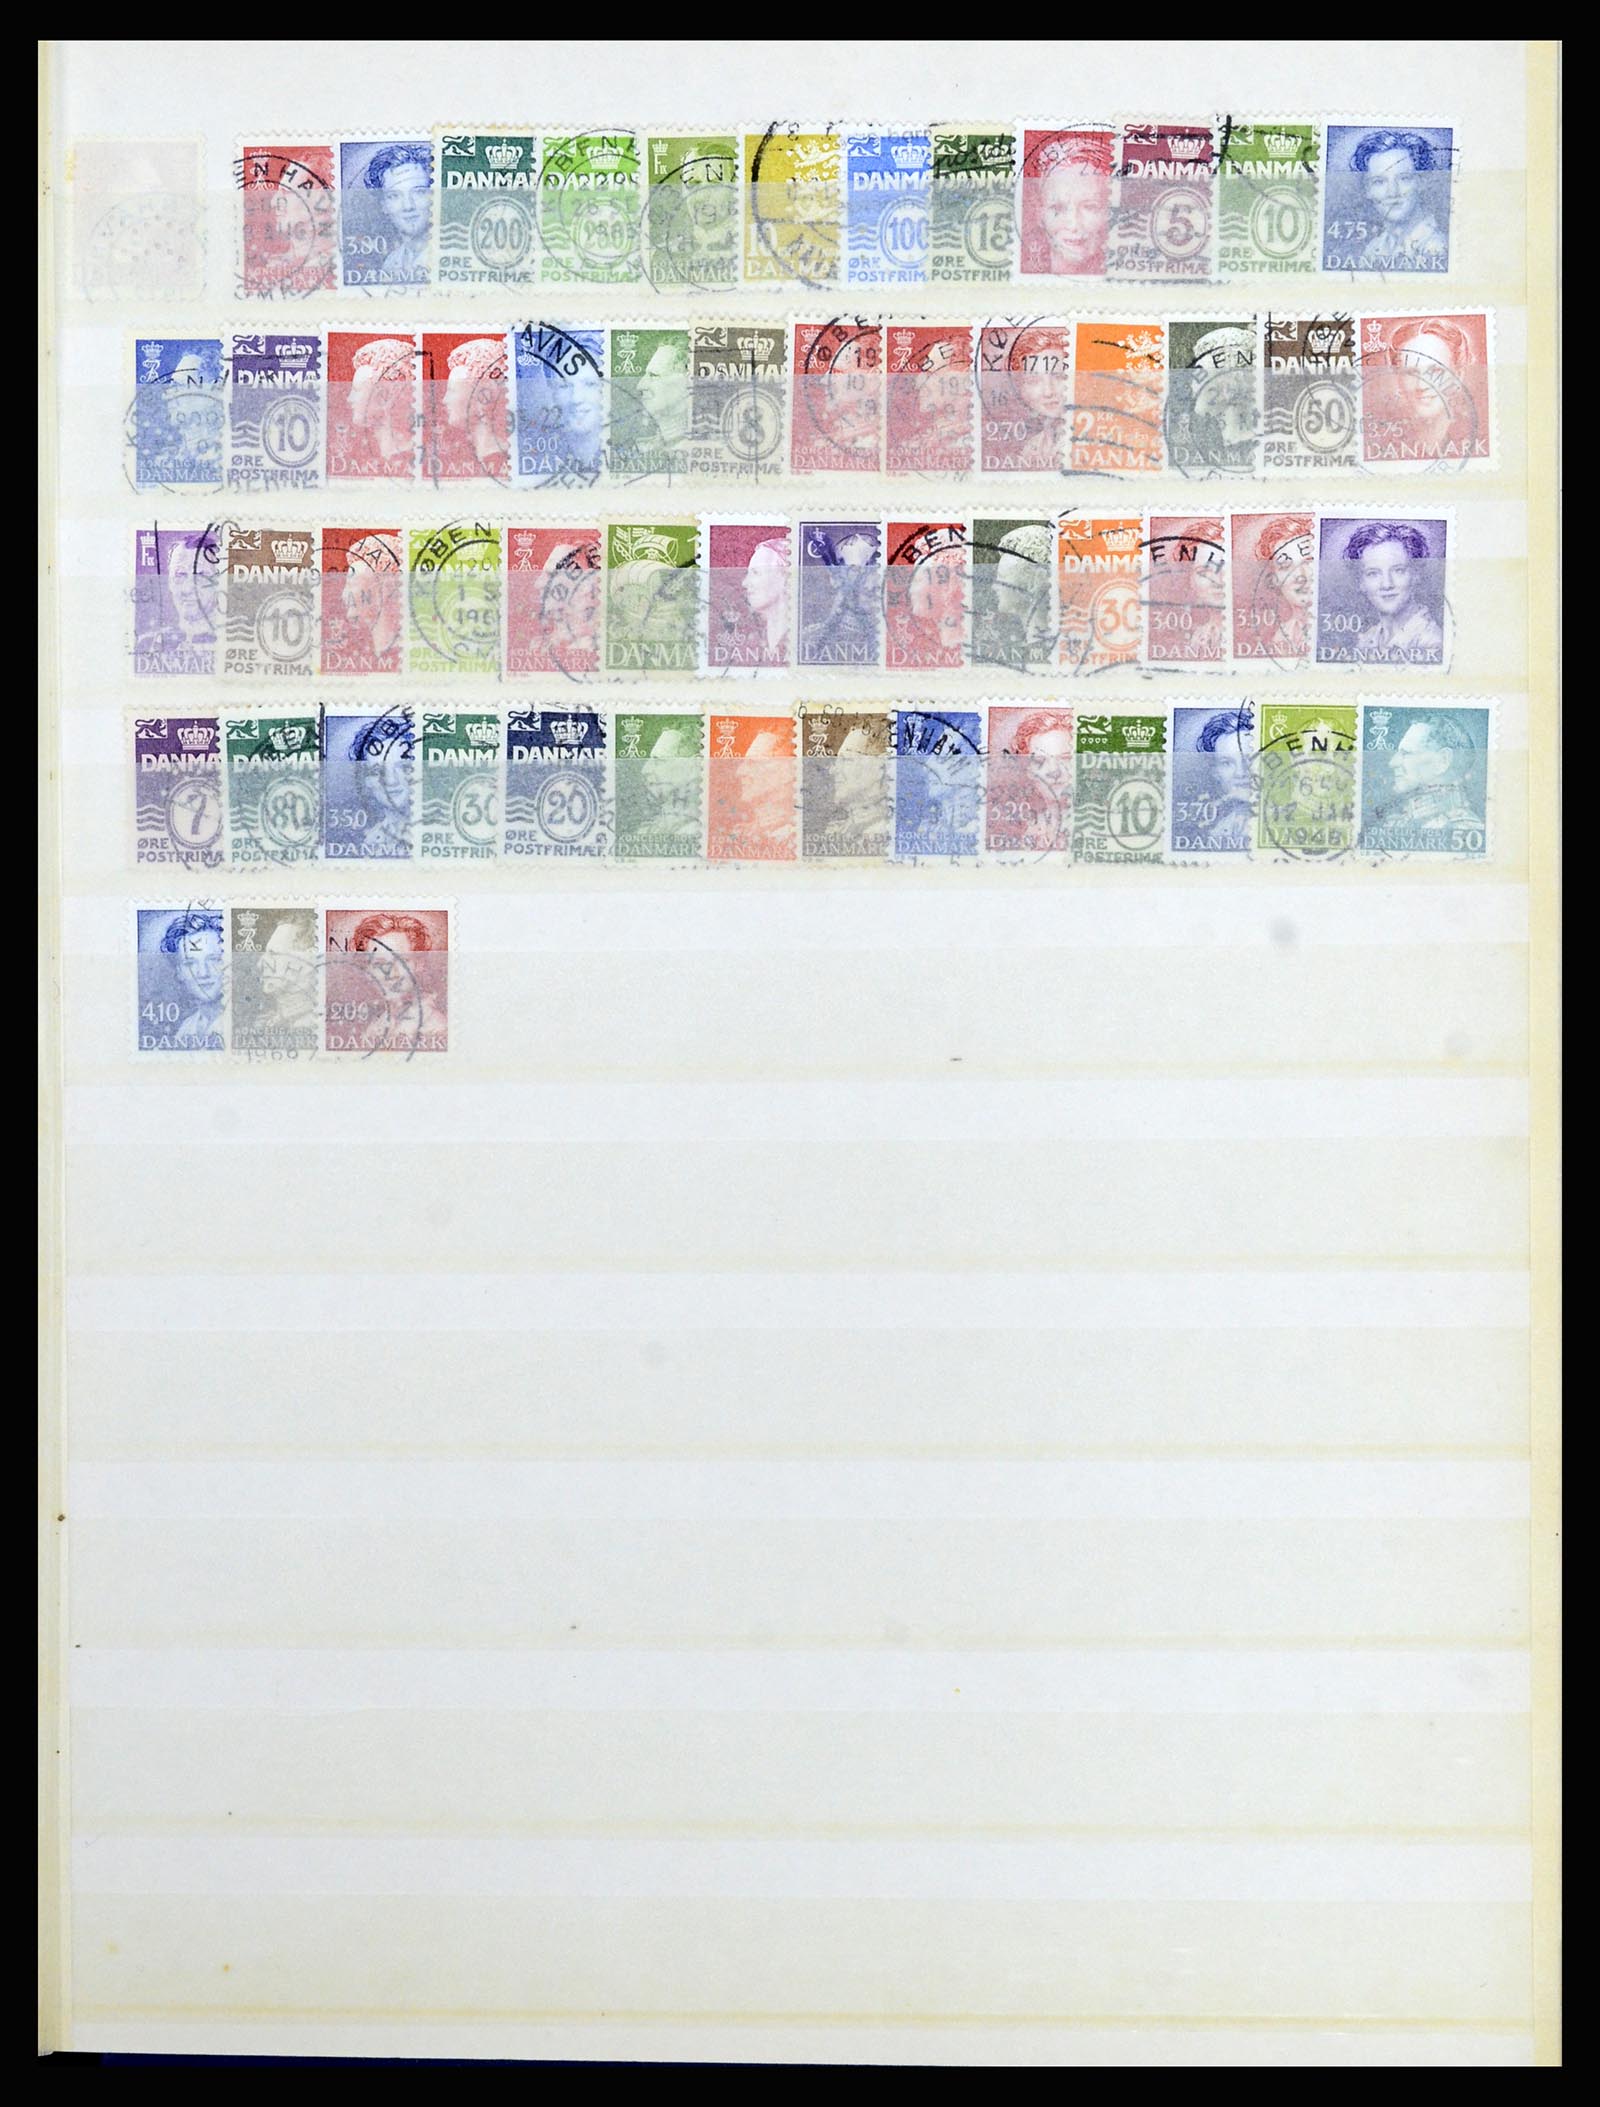 37056 066 - Stamp collection 37056 Denmark perfins.